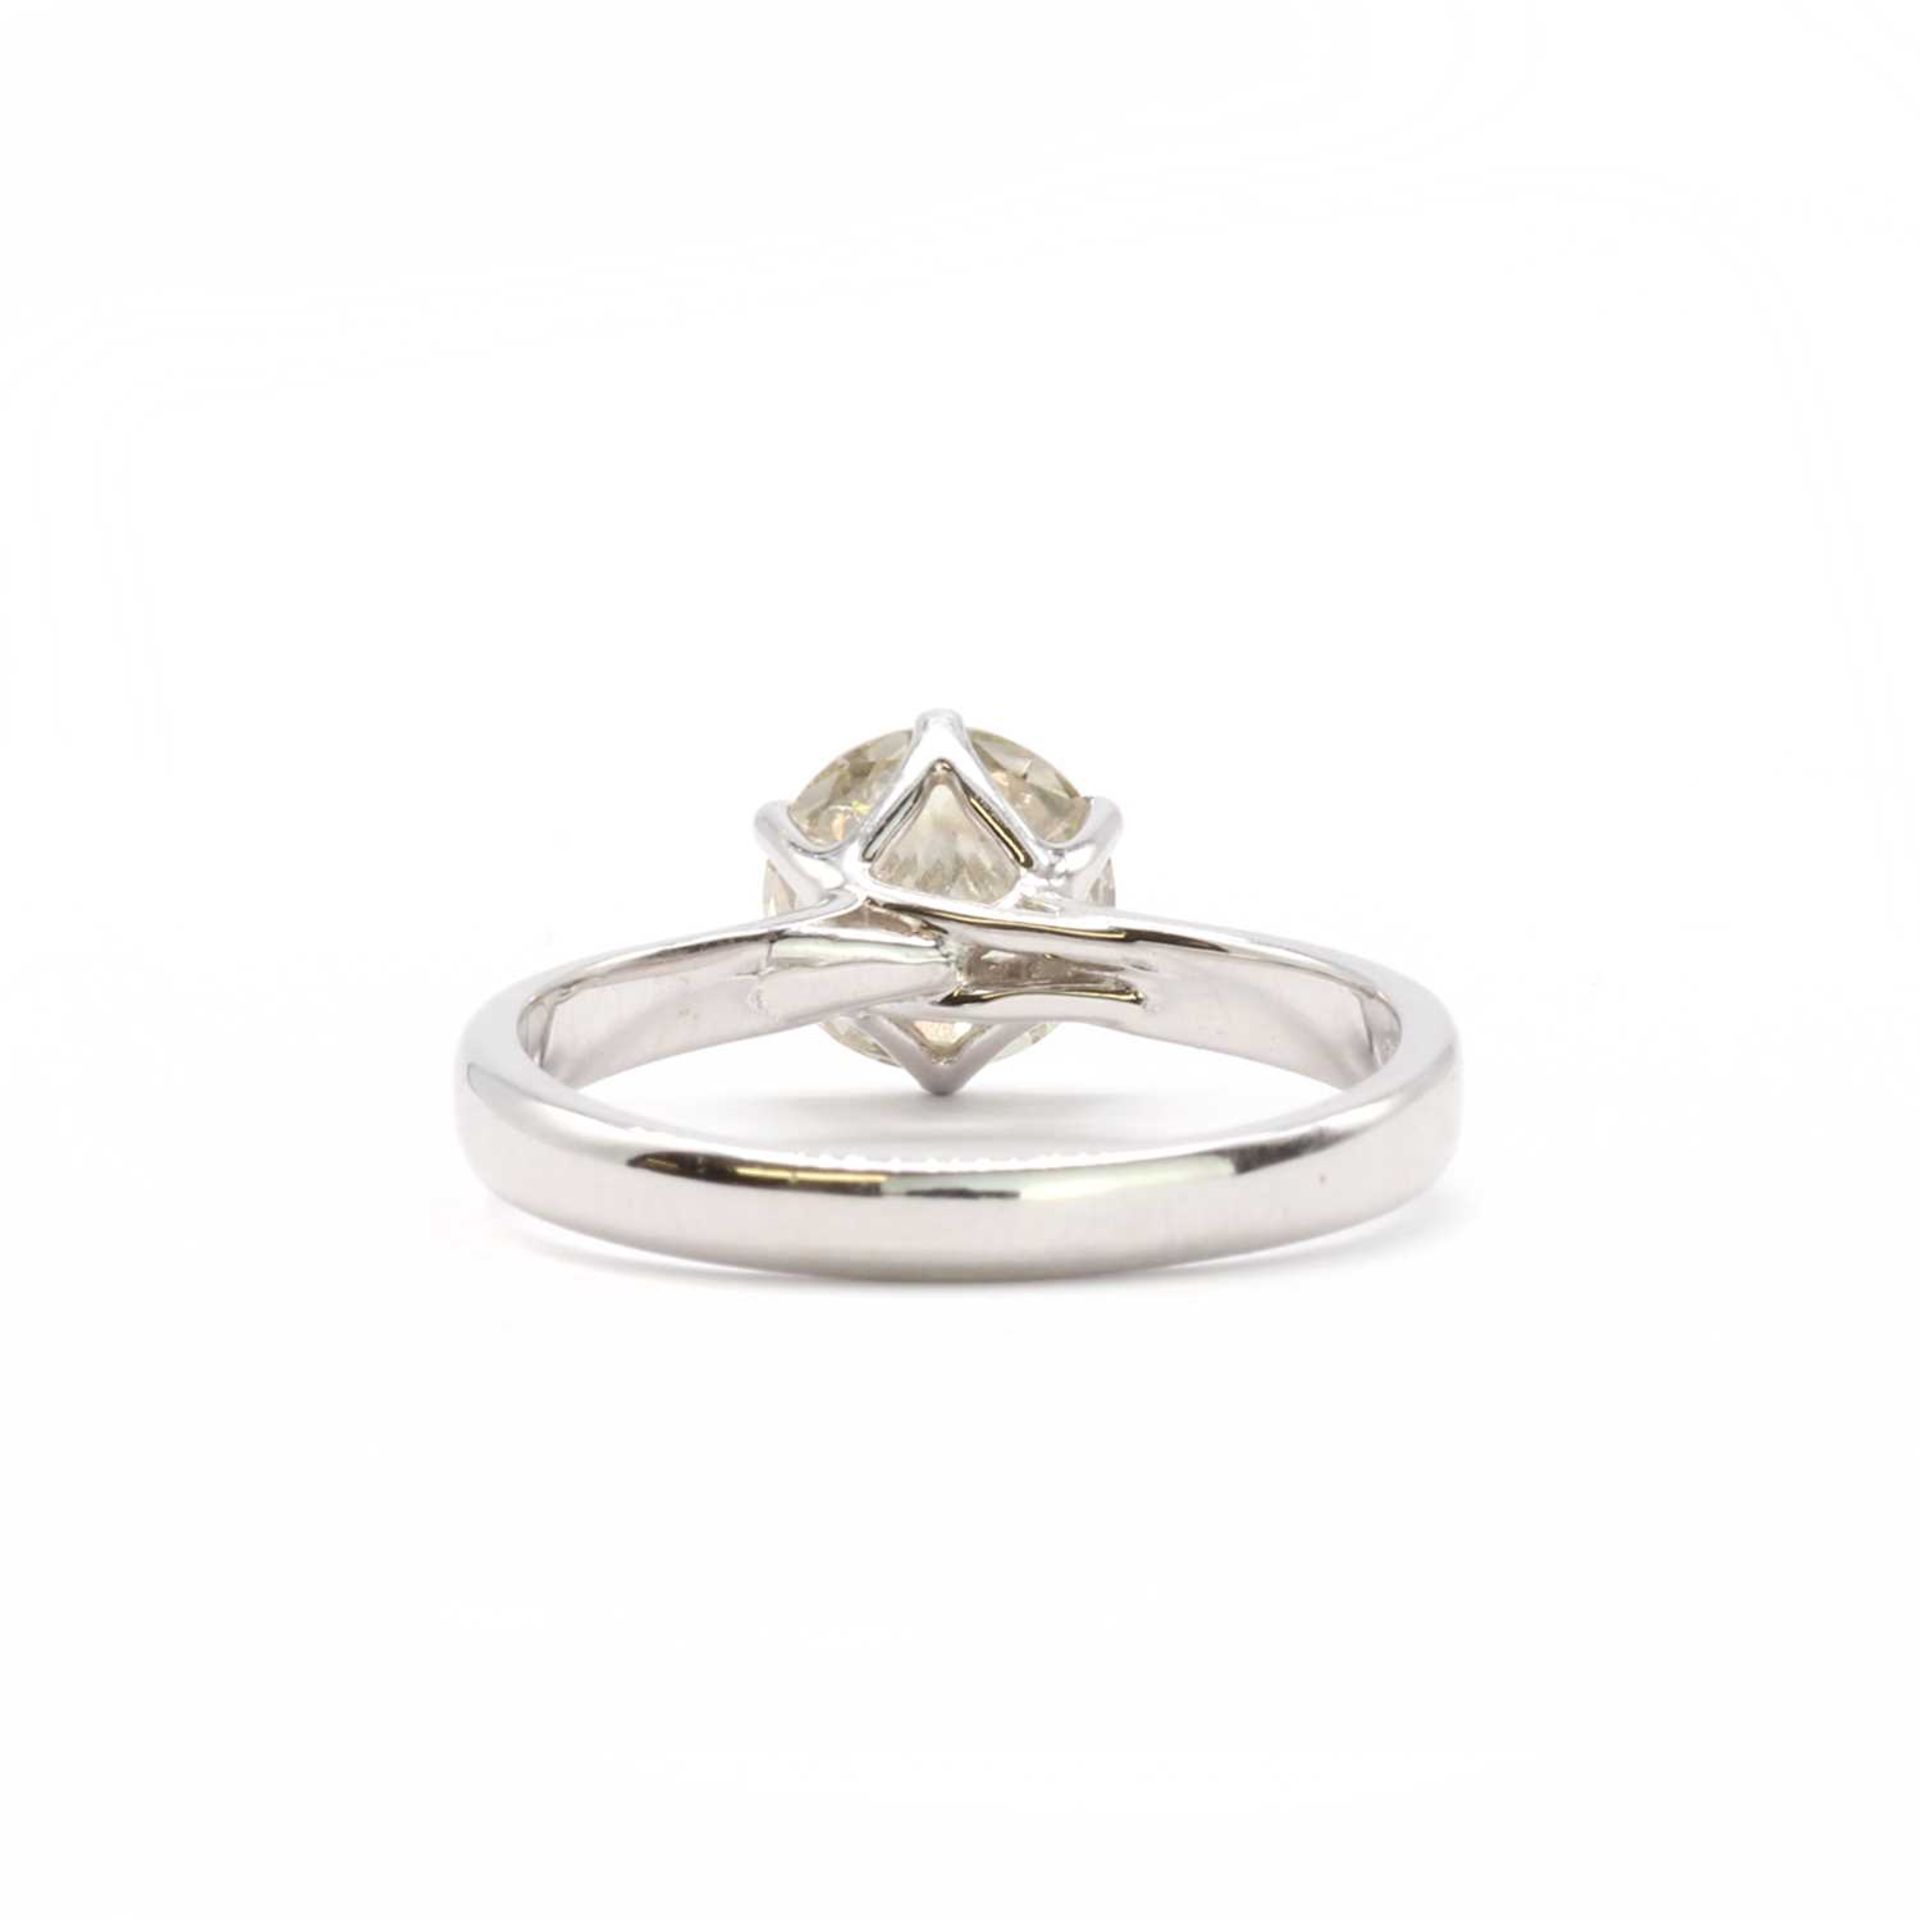 An 18ct white gold single stone diamond ring, - Image 3 of 3